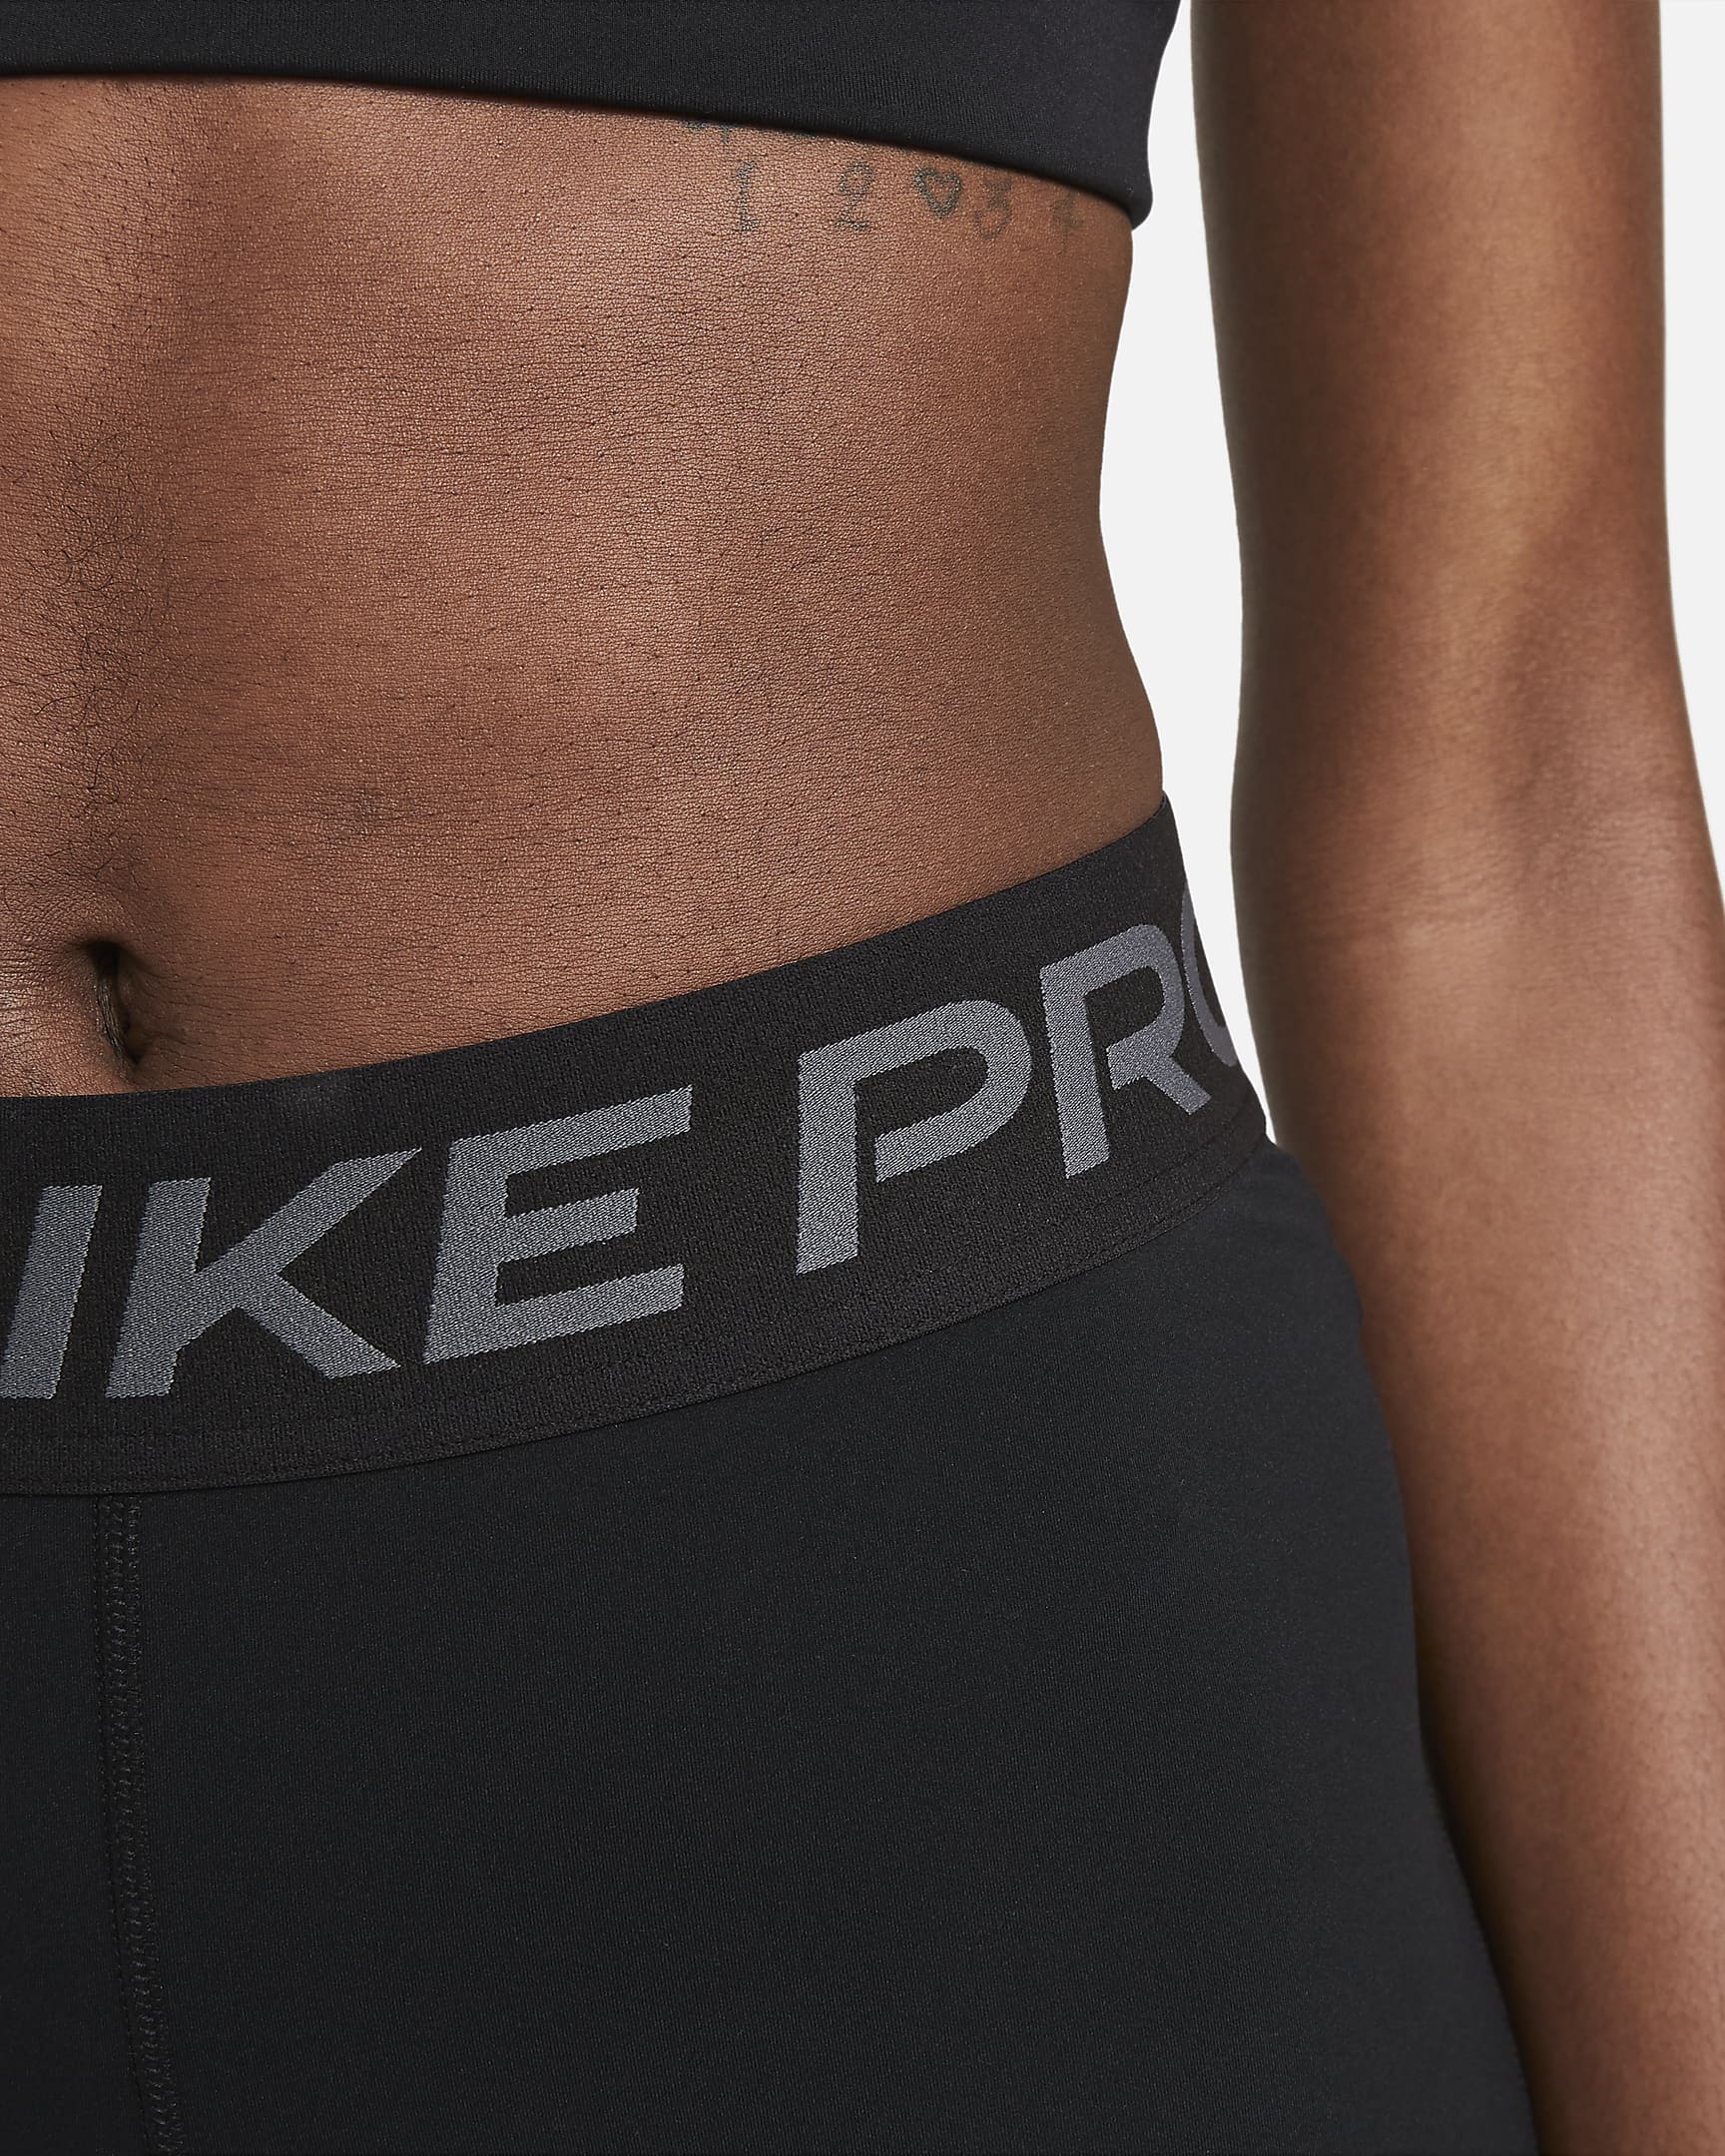 Nike Pro Women's 3" Shorts - Black/Iron Grey